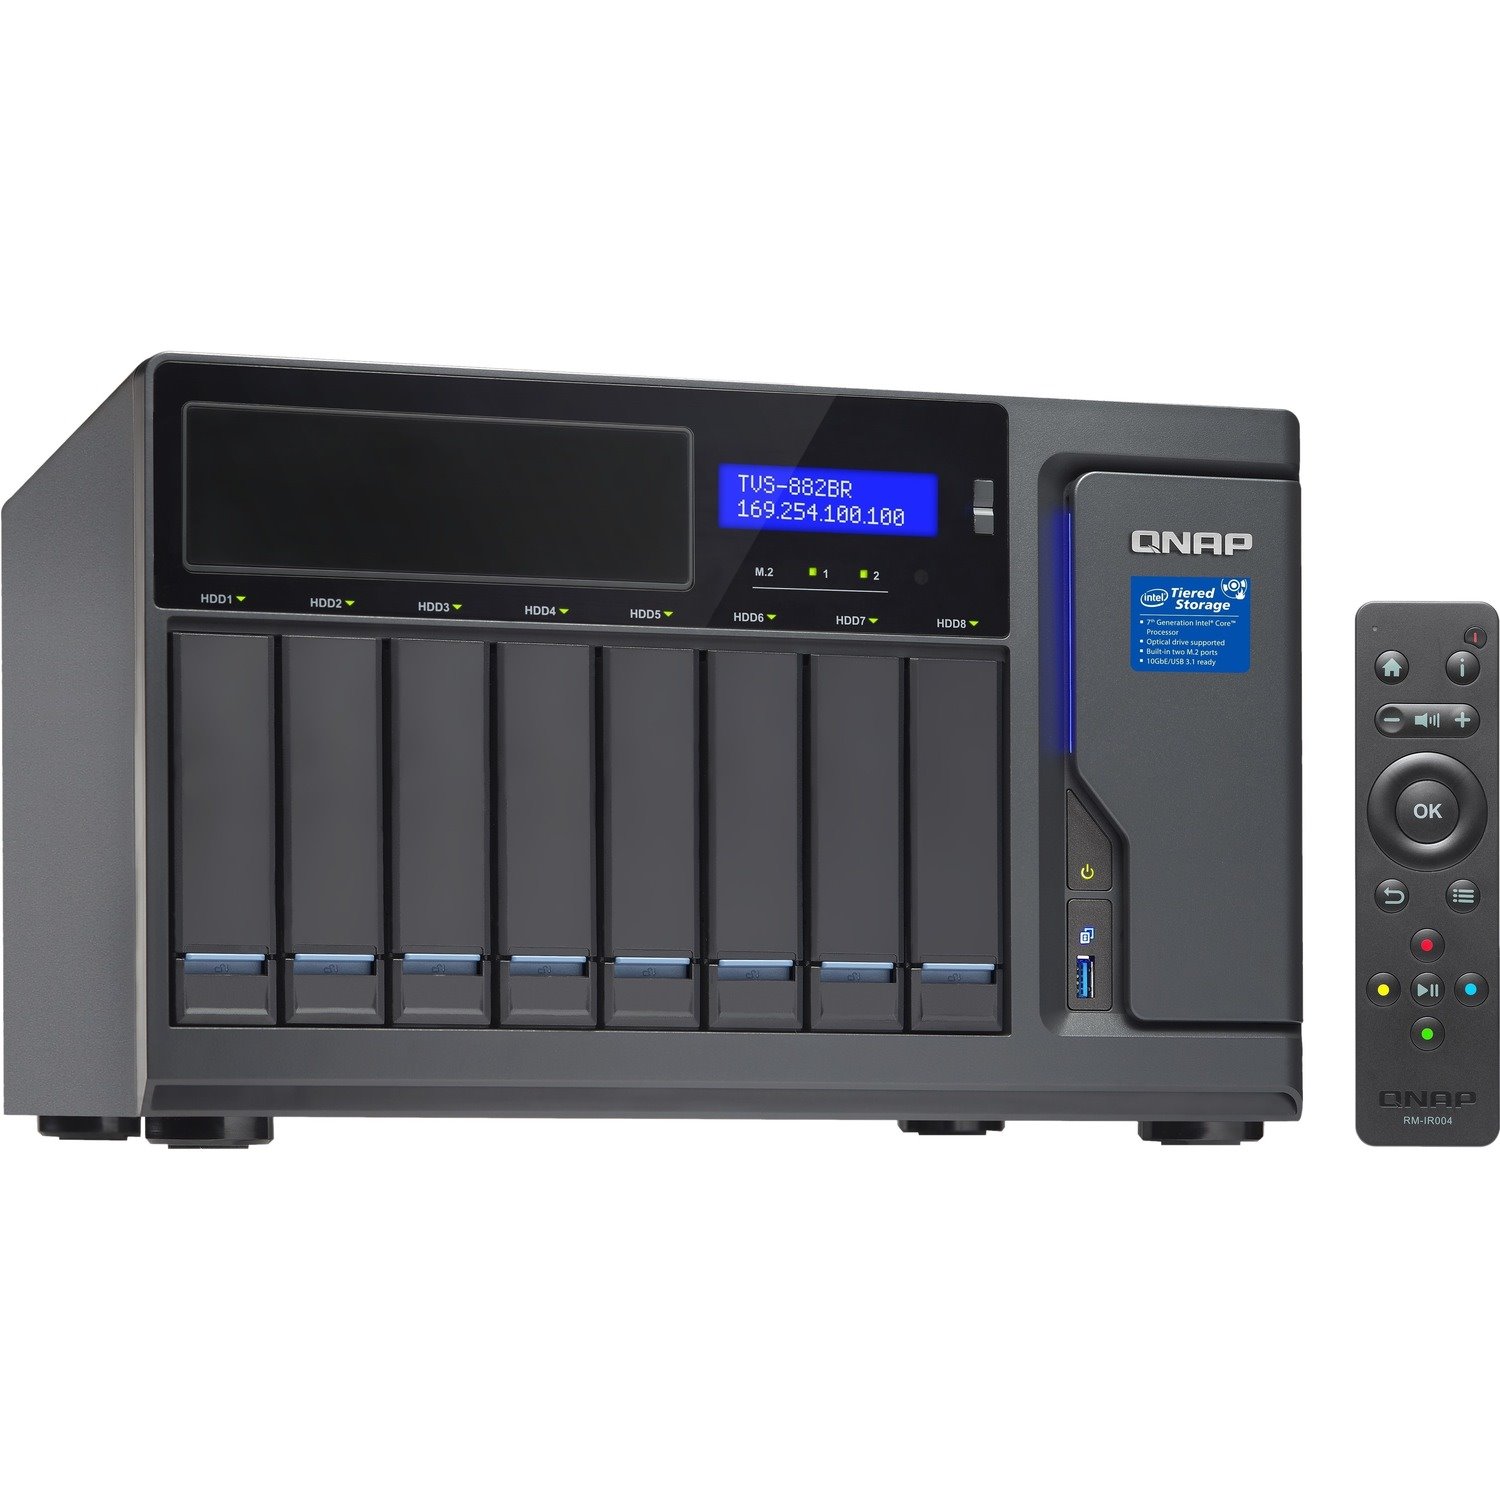 QNAP Turbo vNAS TVS-882BR SAN/NAS Storage System